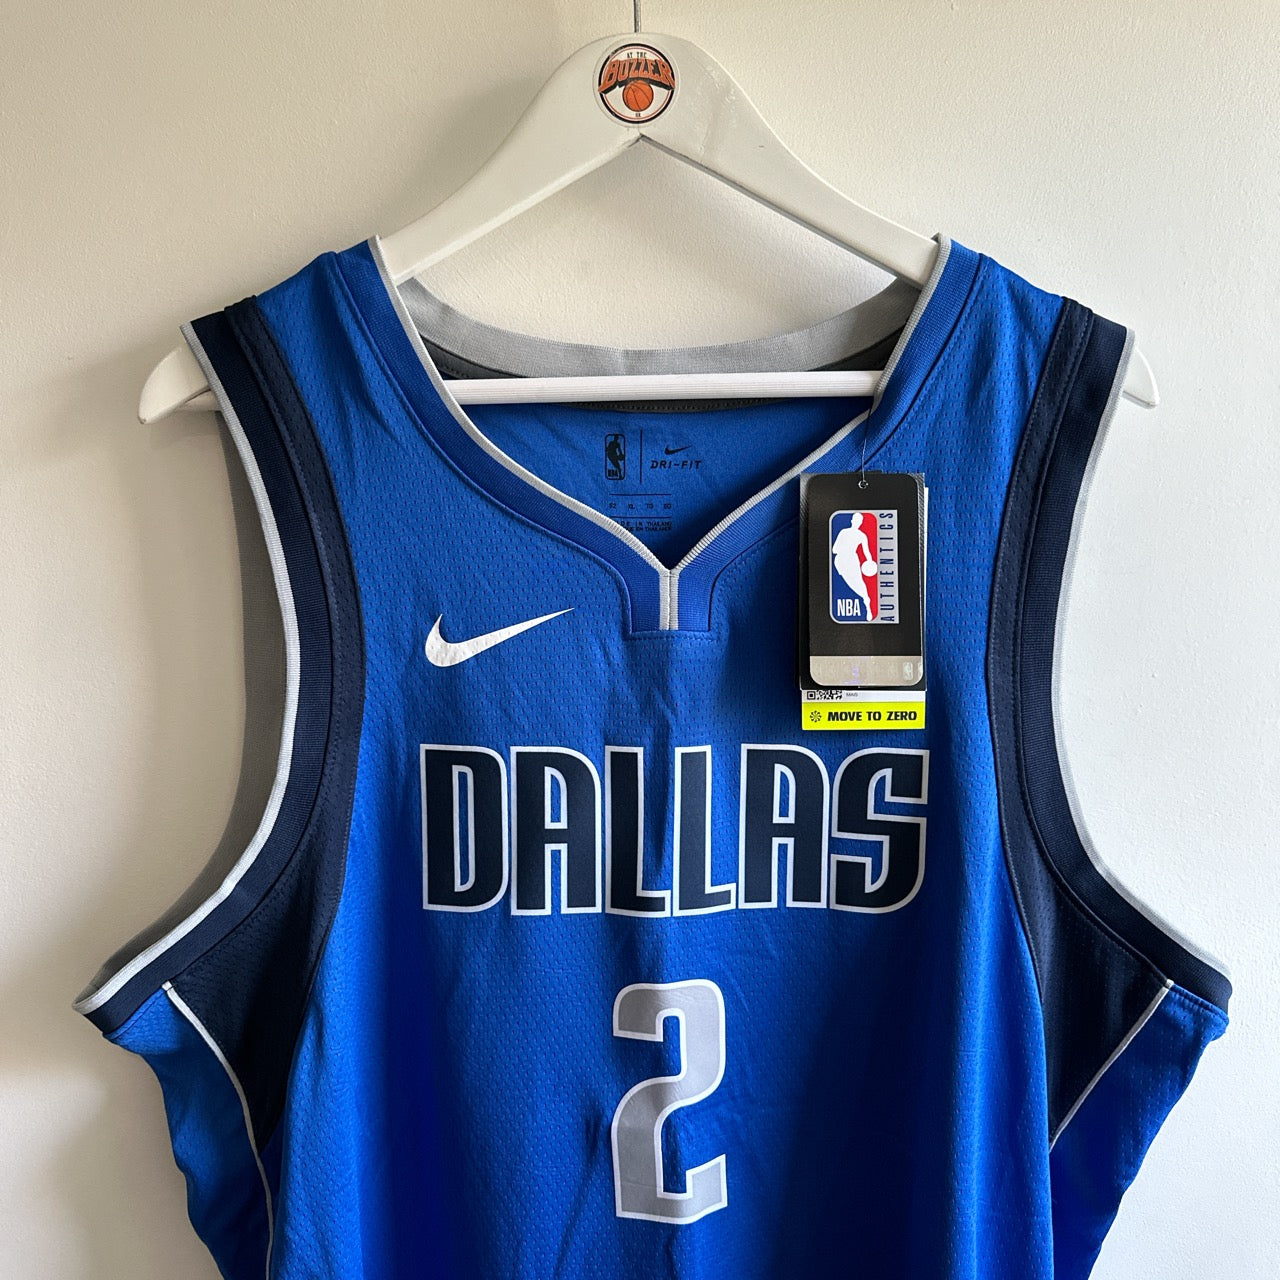 Dallas Mavericks Kyrie Irving Nike jersey - XL